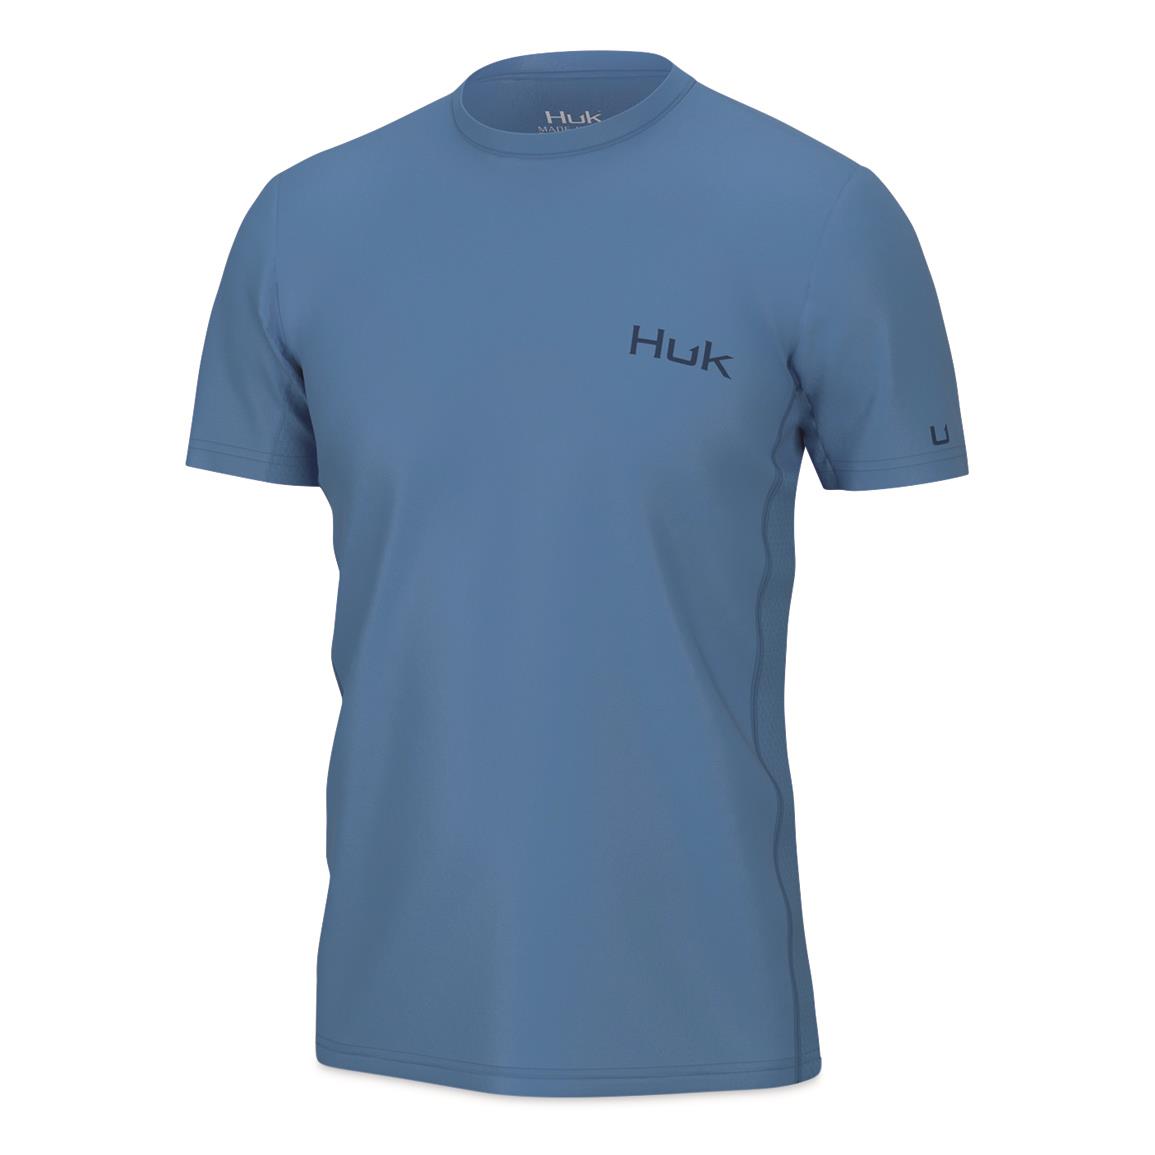 Huk Icon X Short Sleeve Shirt - 730121, T-Shirts at Sportsman's Guide